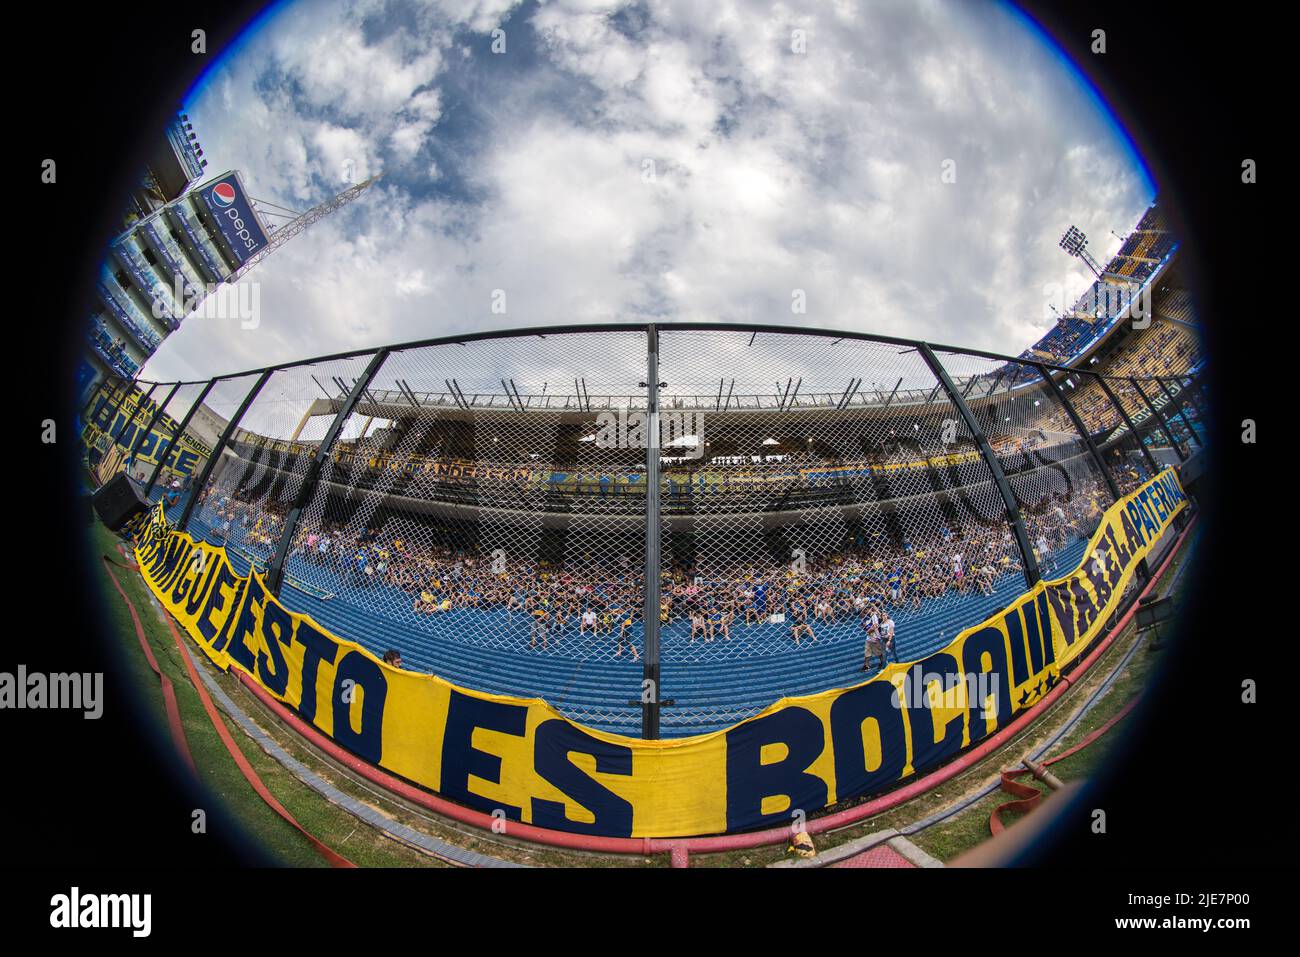 A full capacity stadium at Boca juniors home La Bombonera. Stock Photo